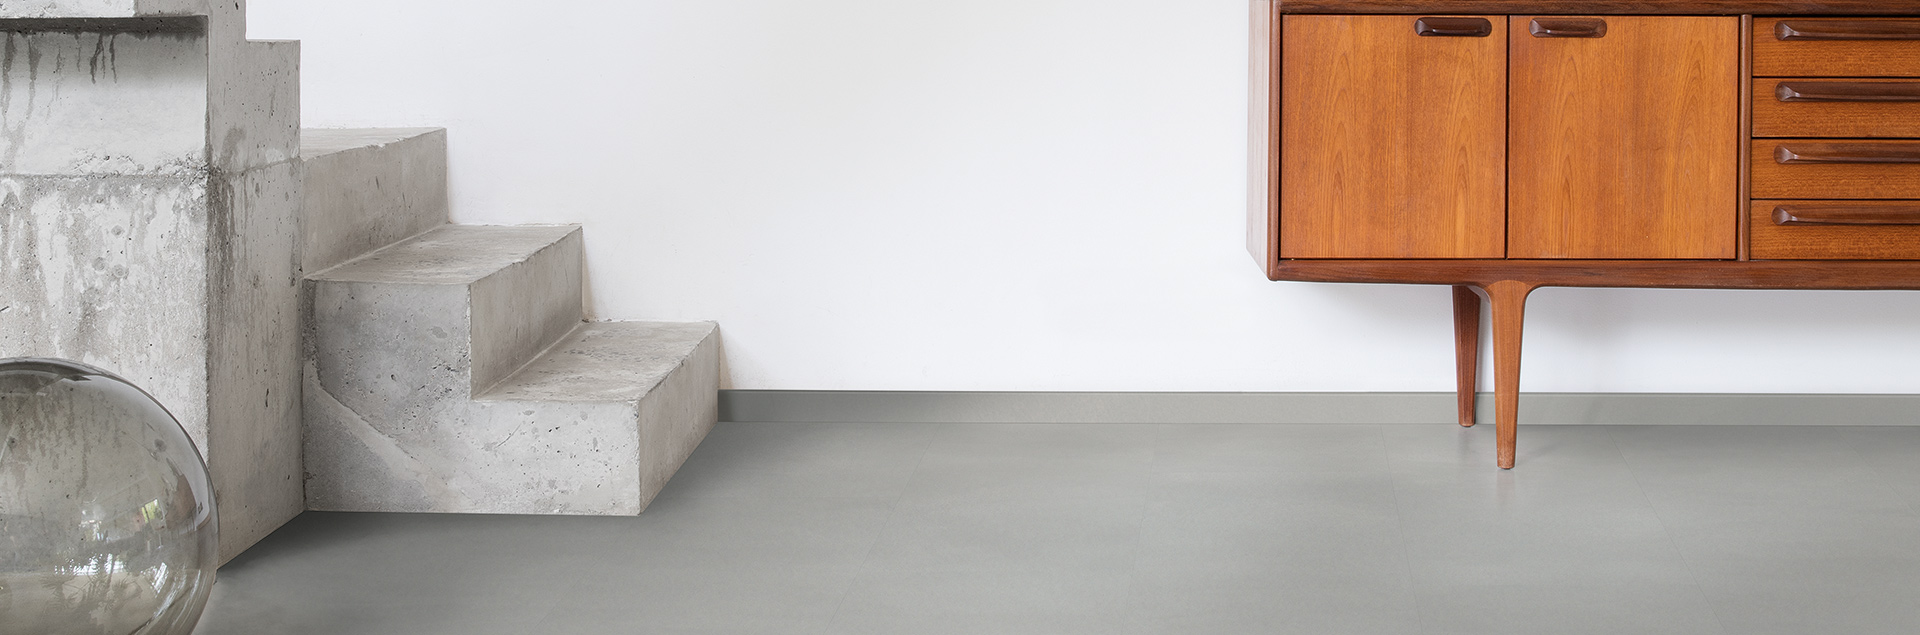 Vinyl flooring with look of concrete